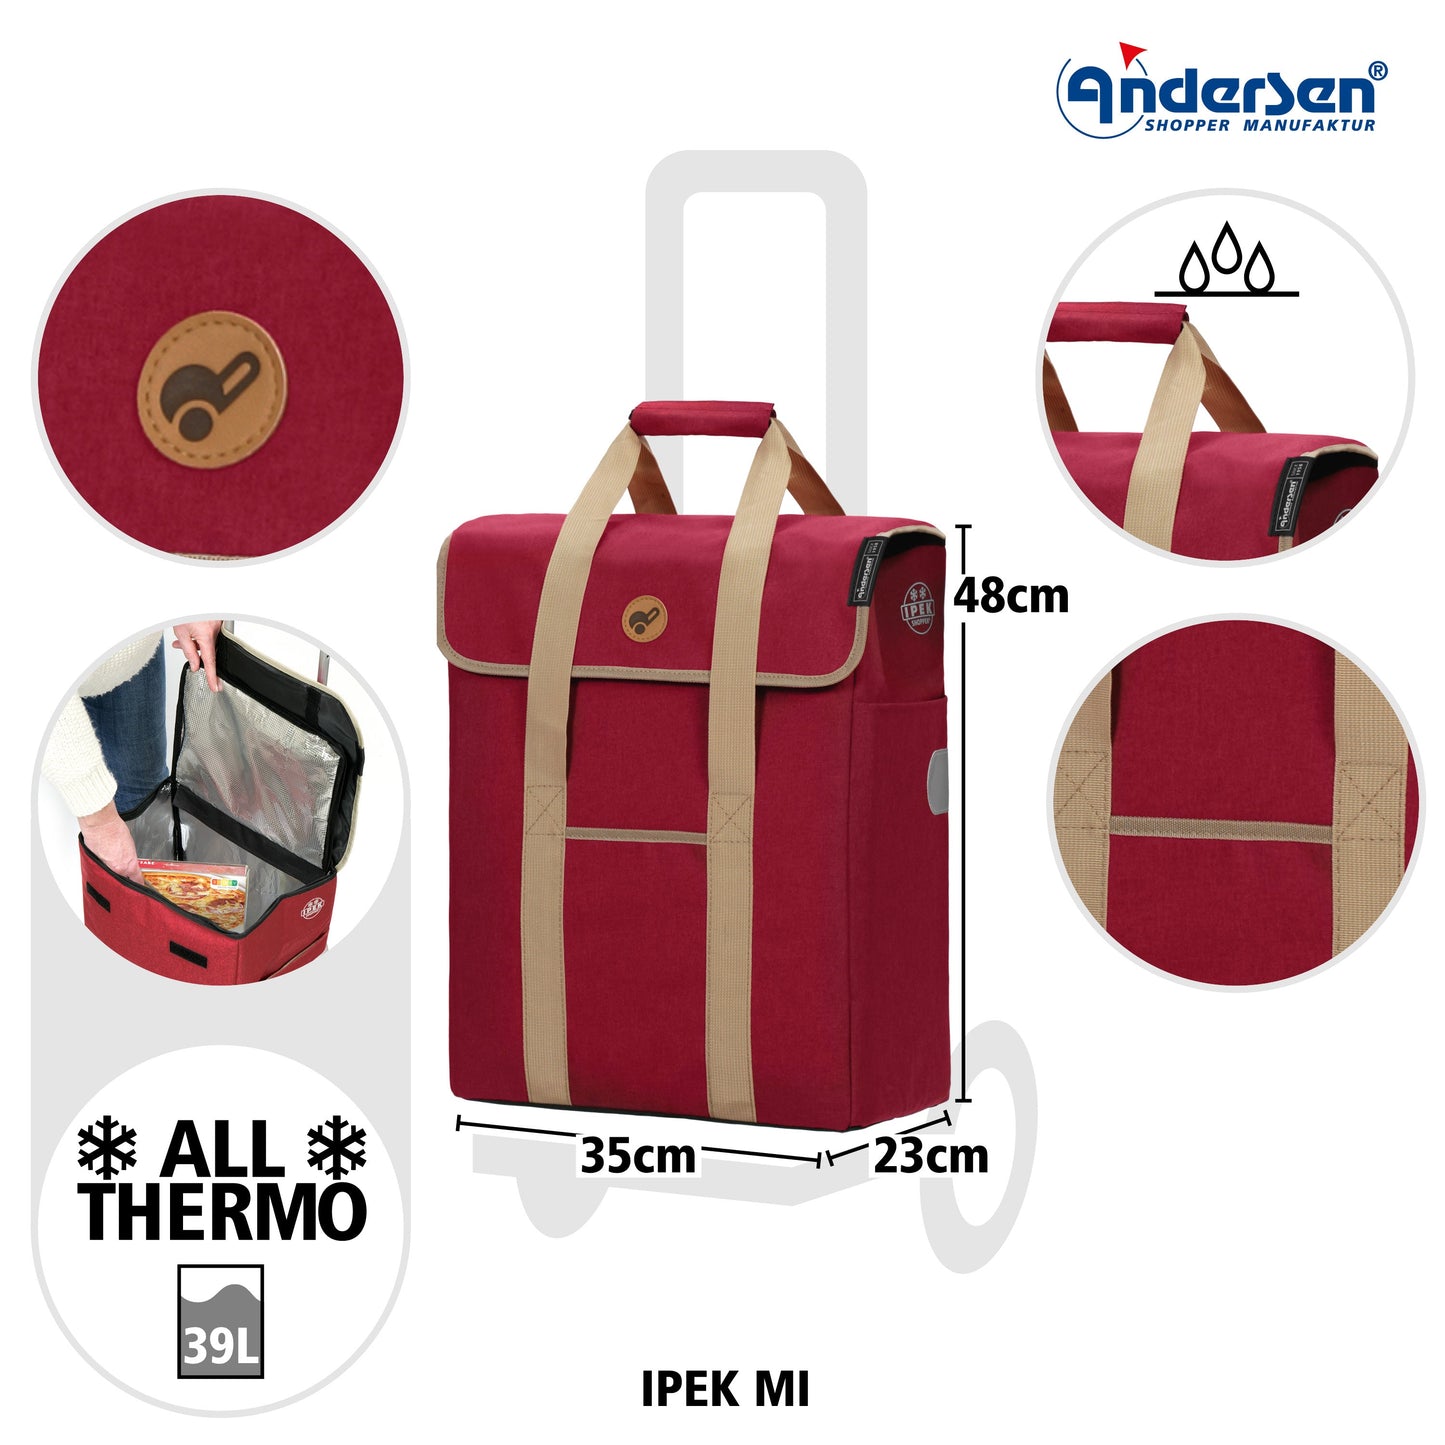 Andersen Shopper Manufaktur-Scala Shopper Plus Ipek Mi rot-www.shopping-trolley.ch-bild3